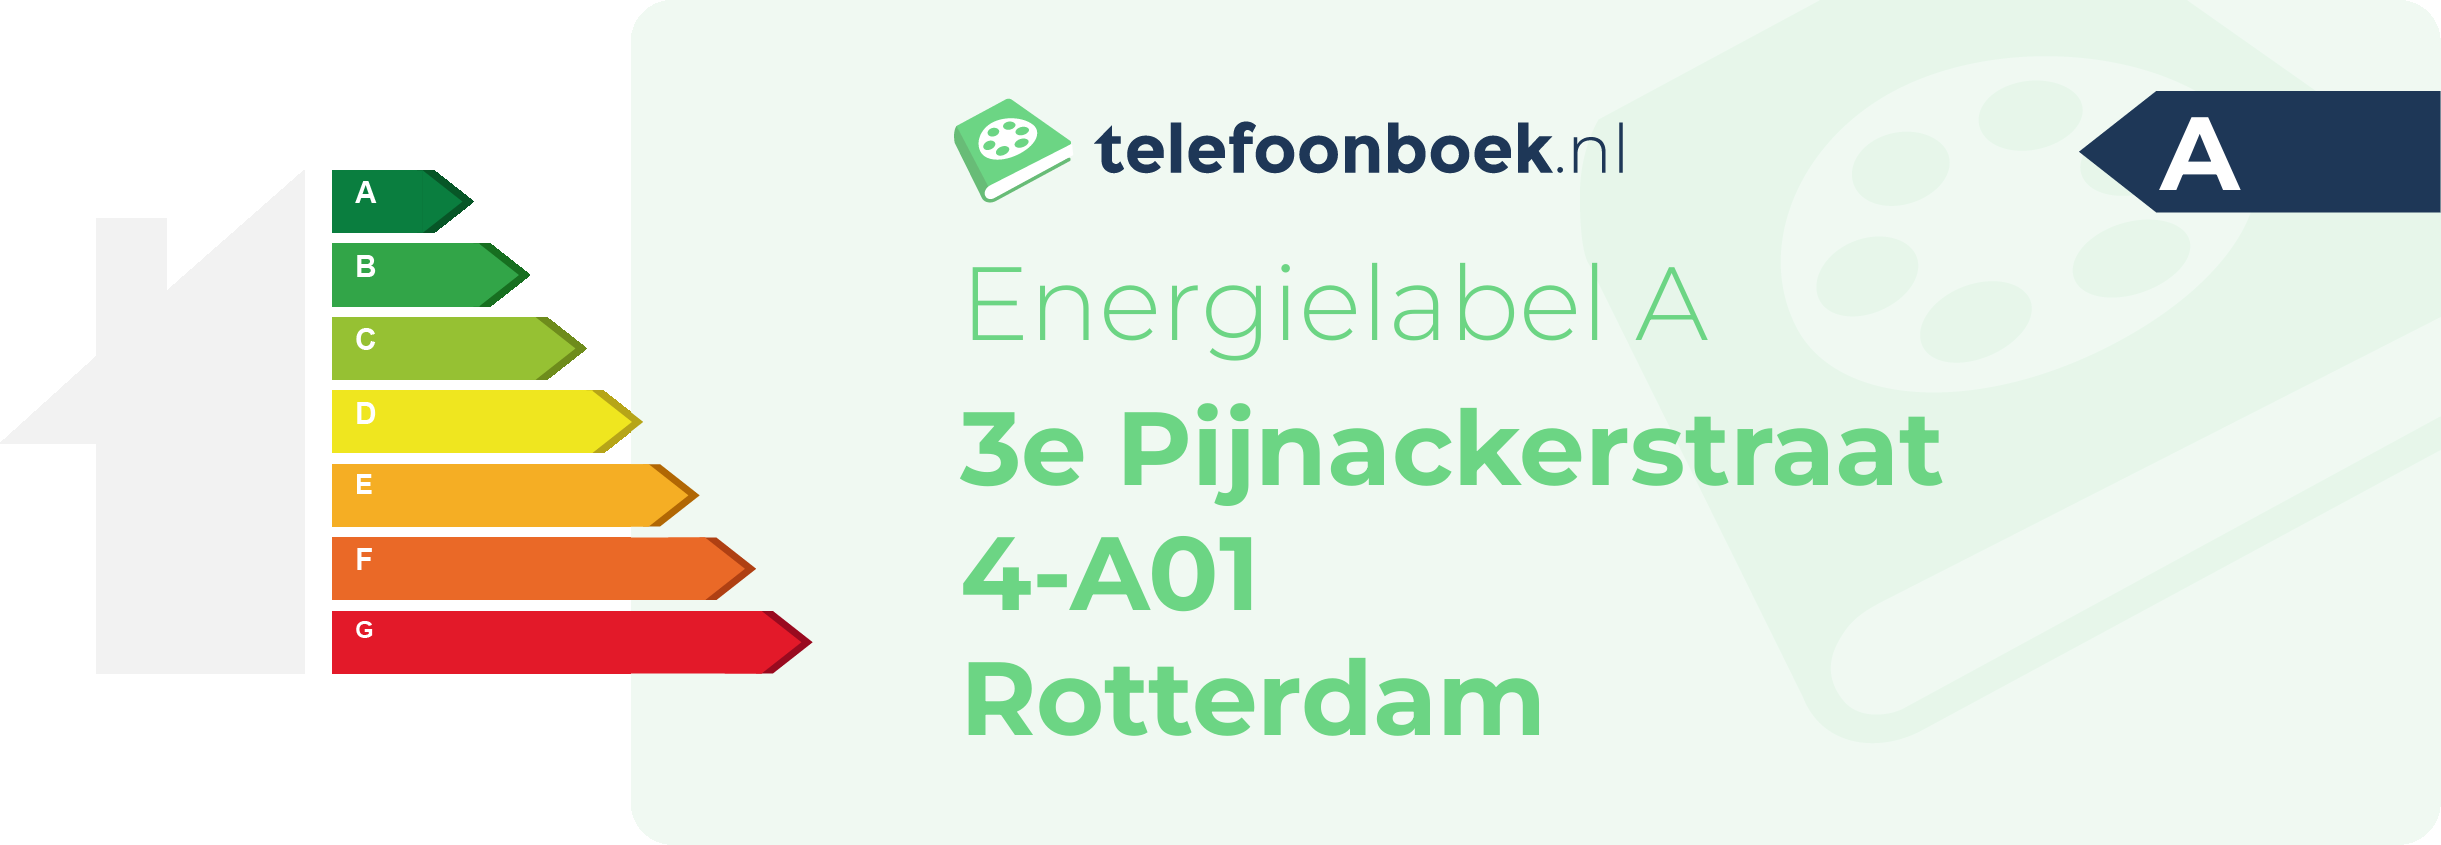 Energielabel 3e Pijnackerstraat 4-A01 Rotterdam